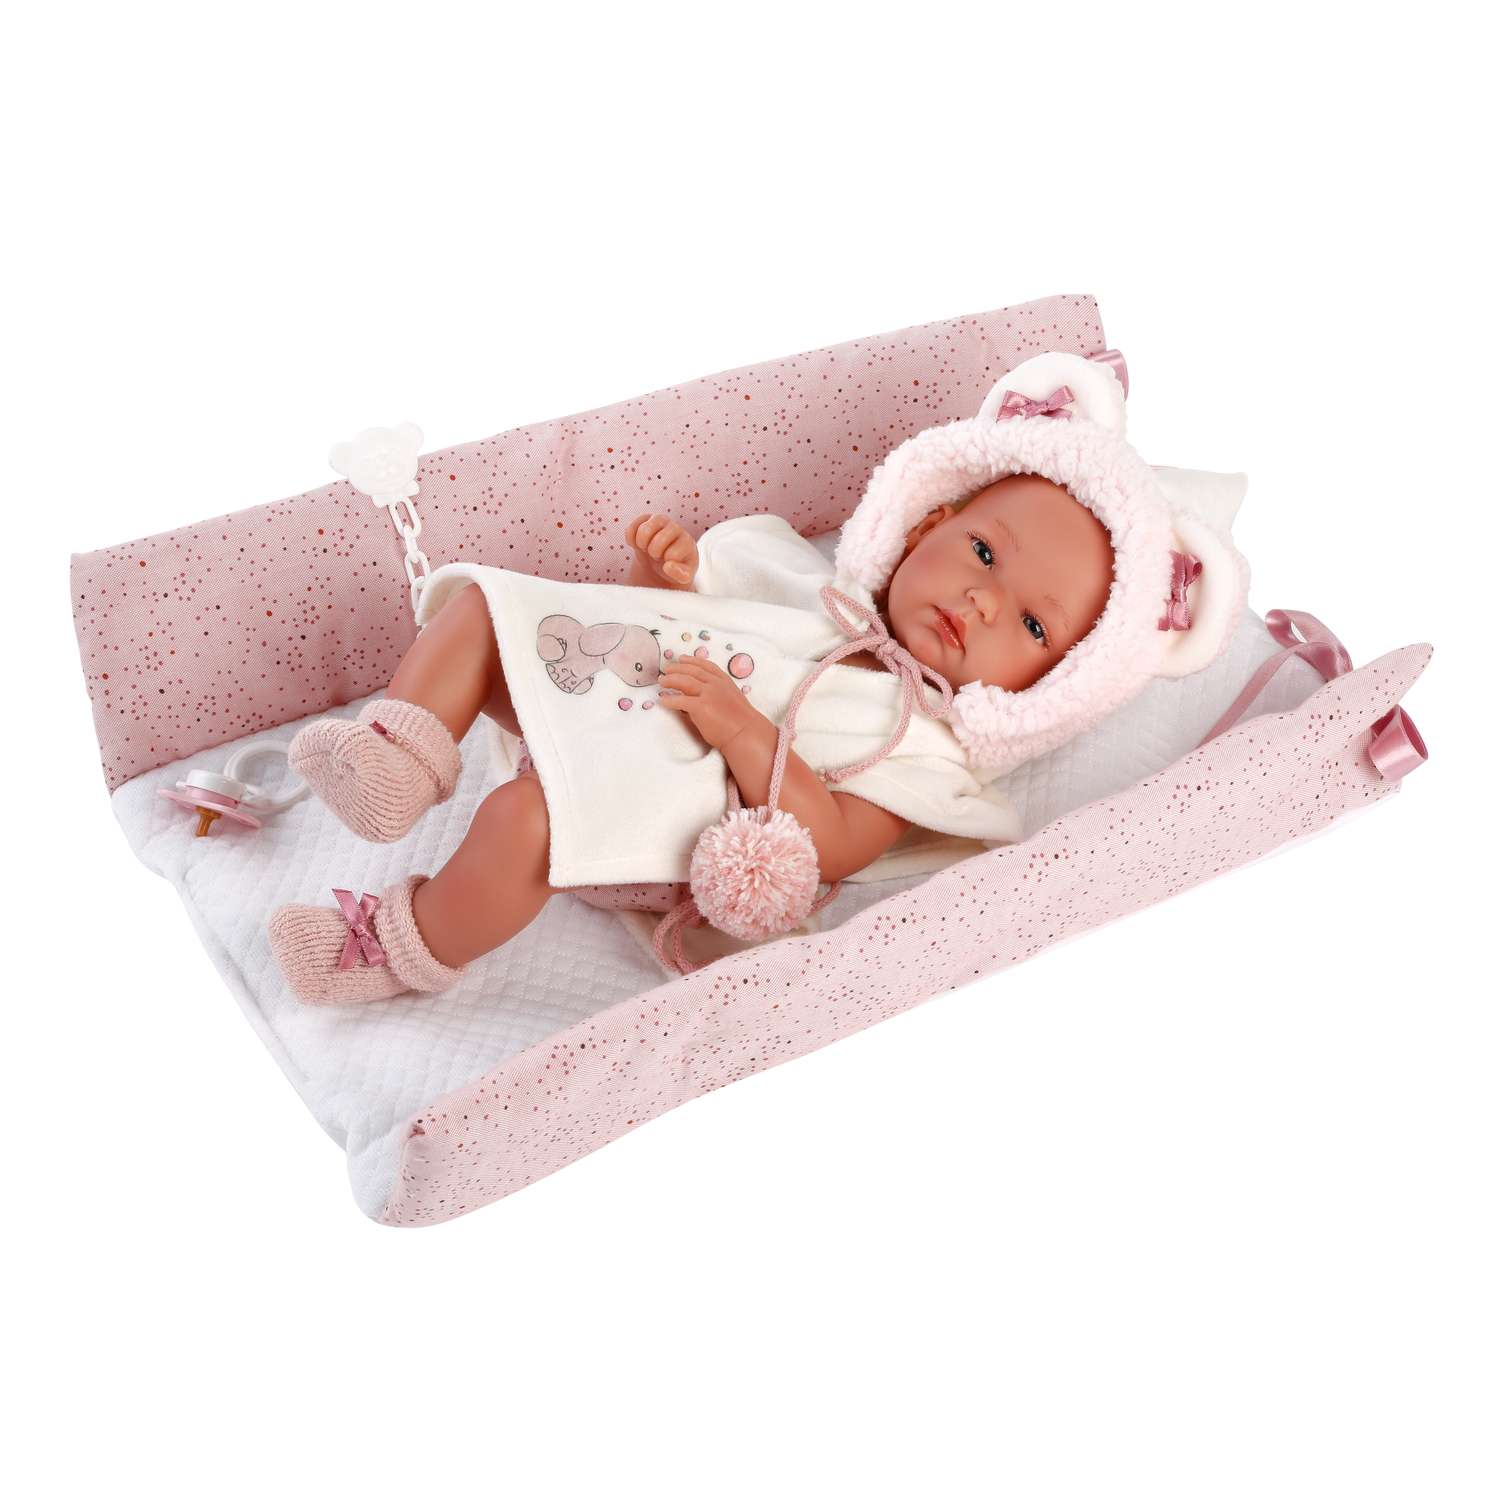 Кукла LLORENS младенец в розовом с одеяльцем 35 см L 63544 - фото 2